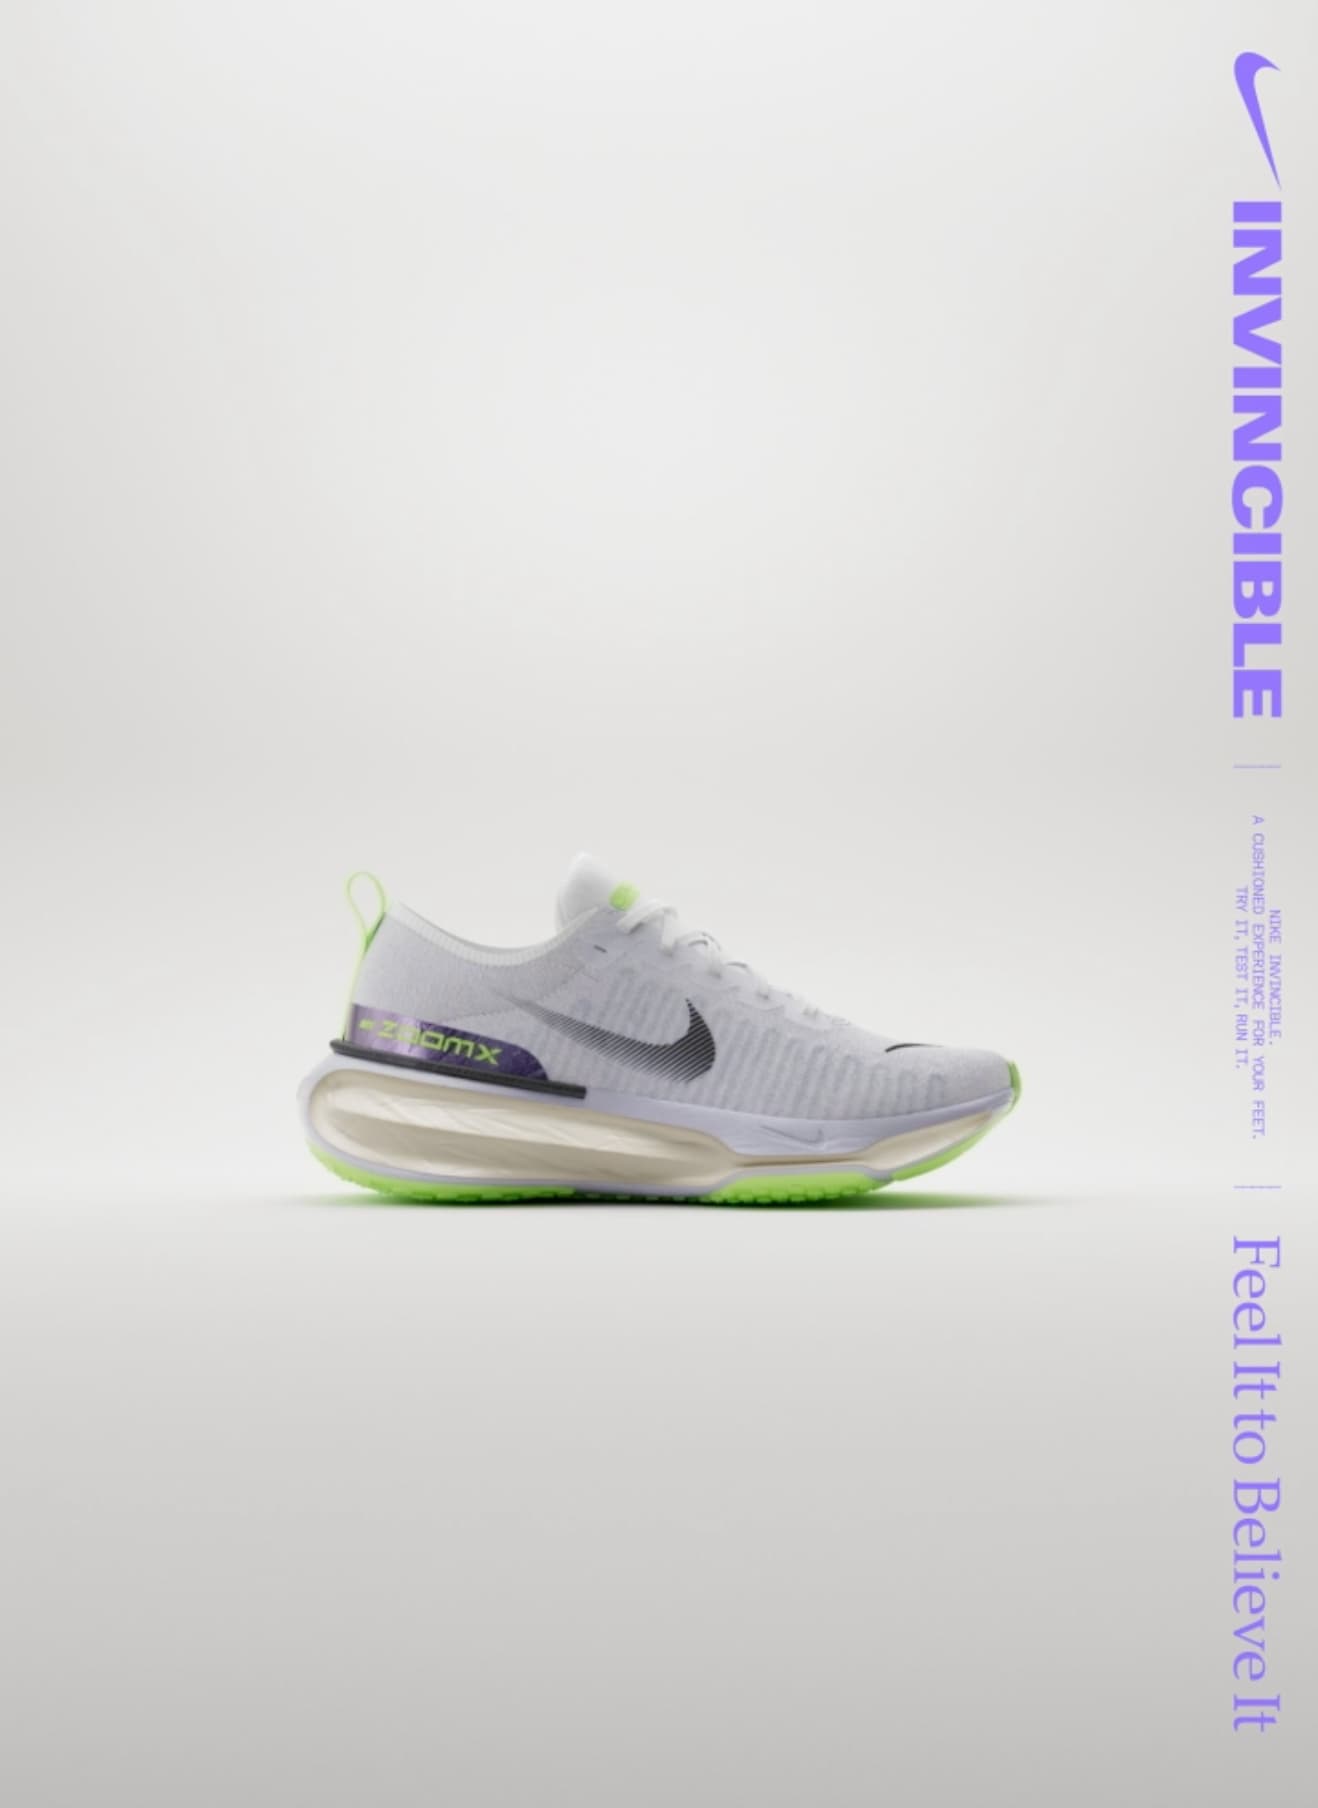 Site de Nike. Nike